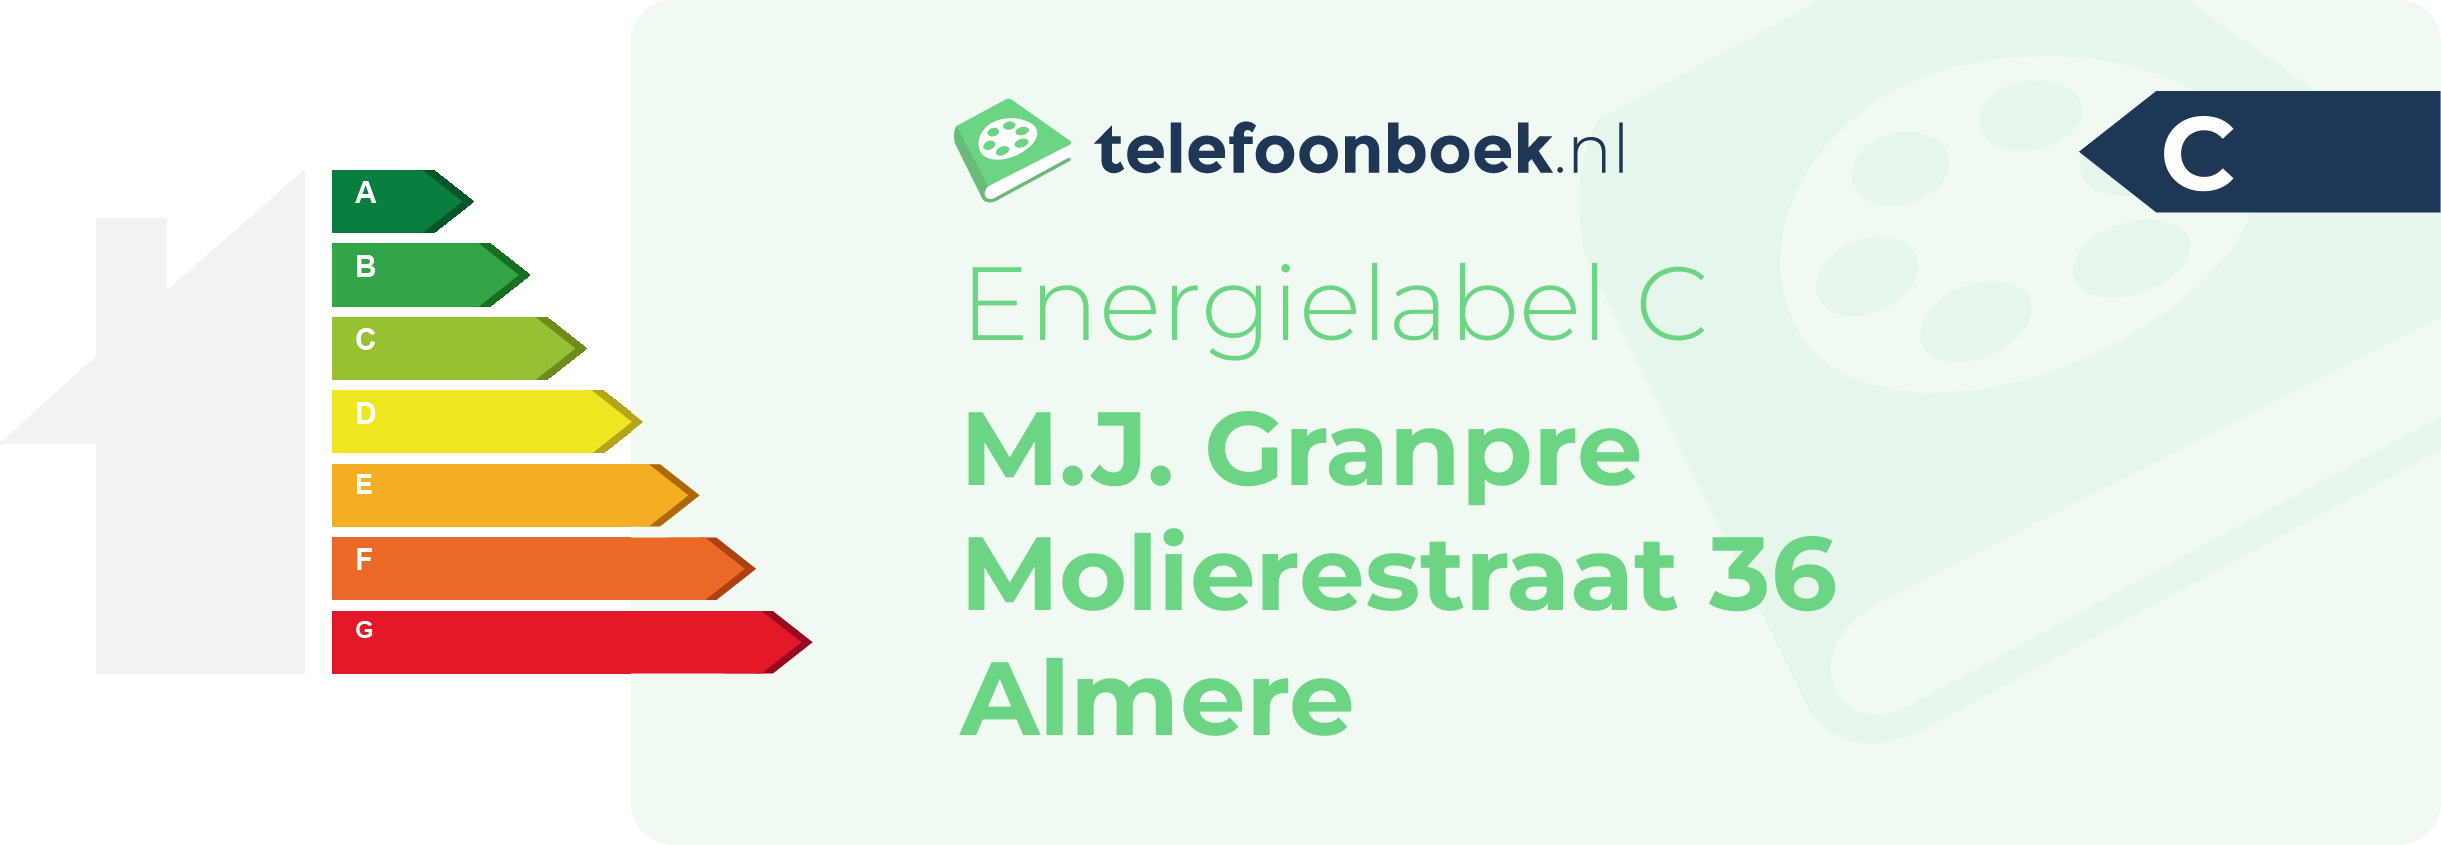 Energielabel M.J. Granpre Molierestraat 36 Almere